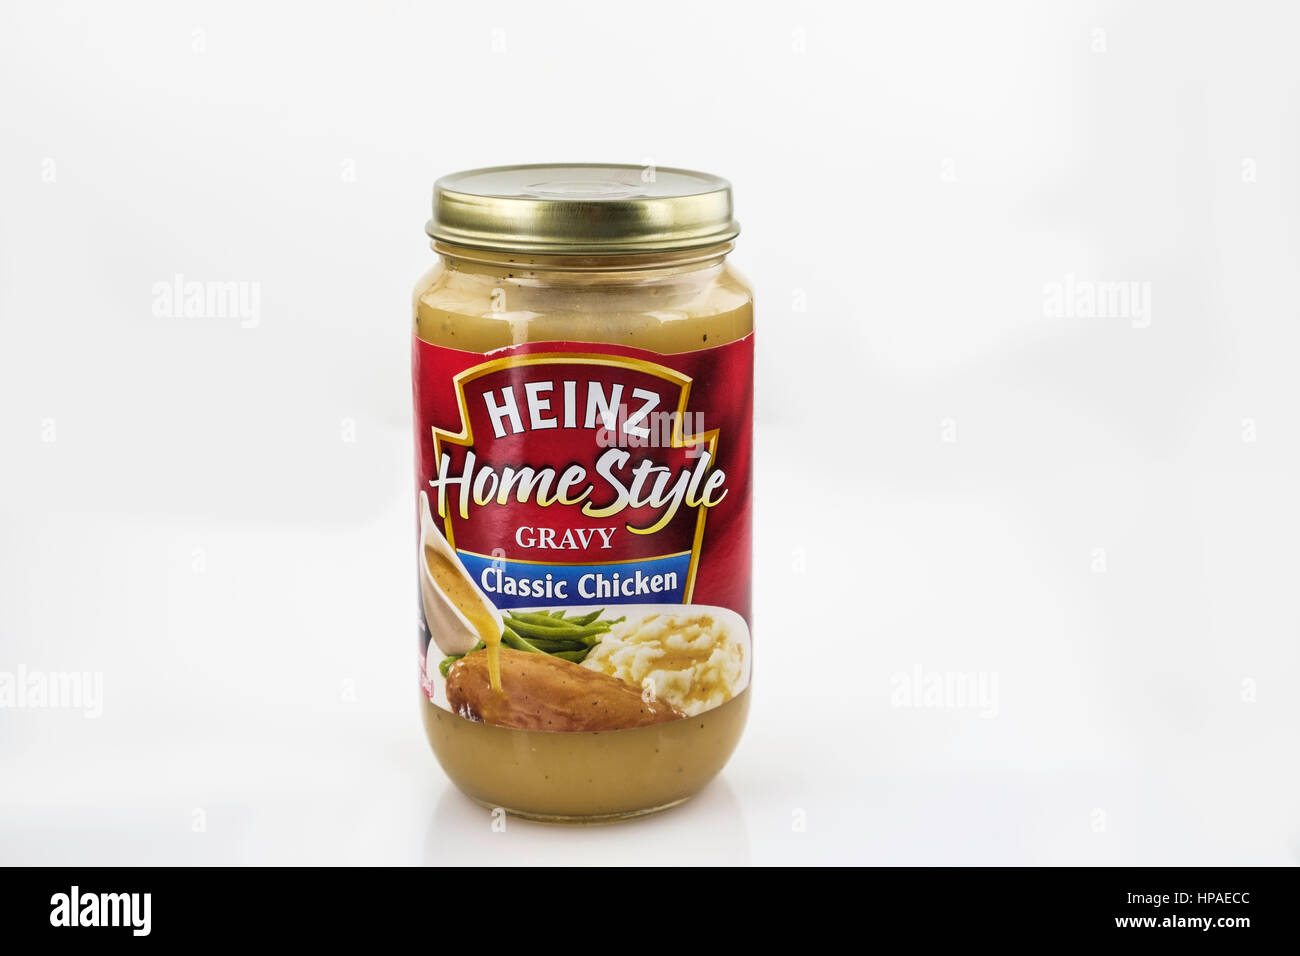 A jar of Heinz brand Home Style gravy, chicken flavored. cutout, copyspace. USA. Stock Photo